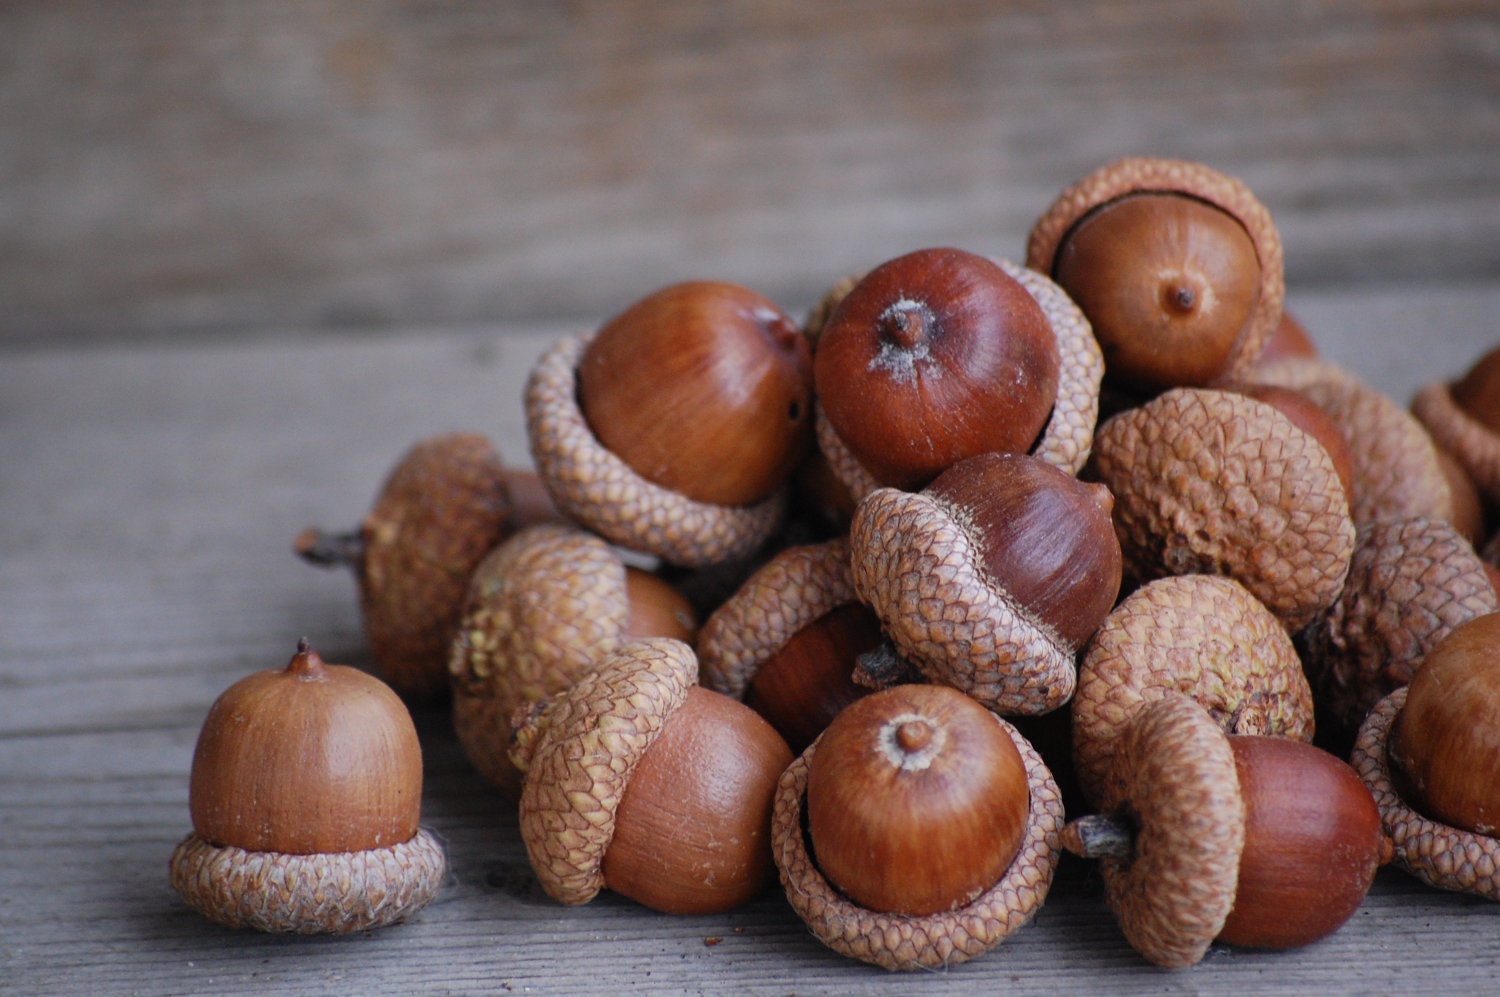 acorn wallpaper,hazelnut,nut,nuts & seeds,food,chestnut